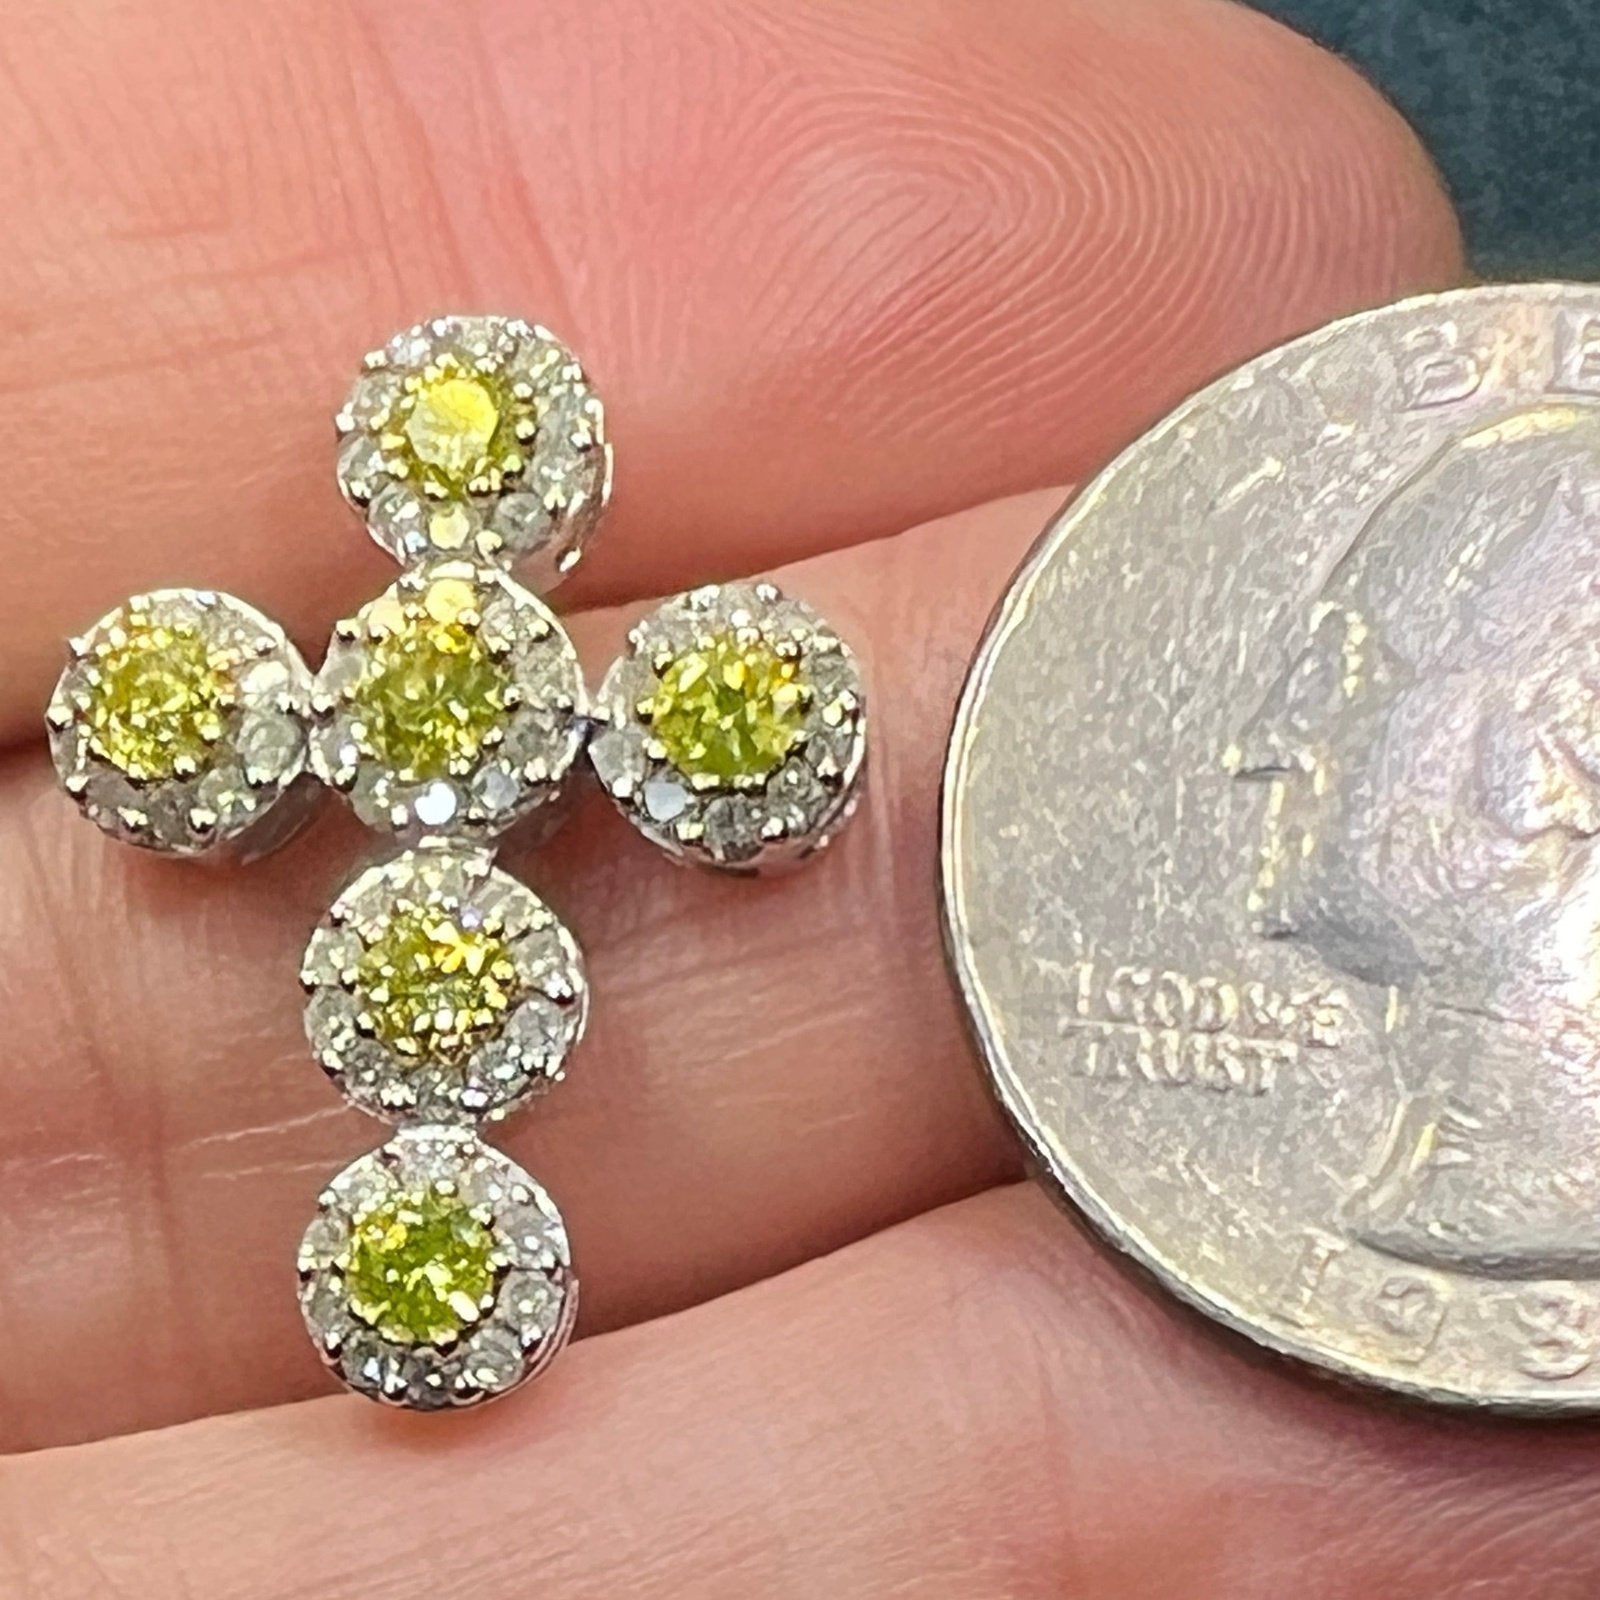 Clea one diamond pendant in yellow gold